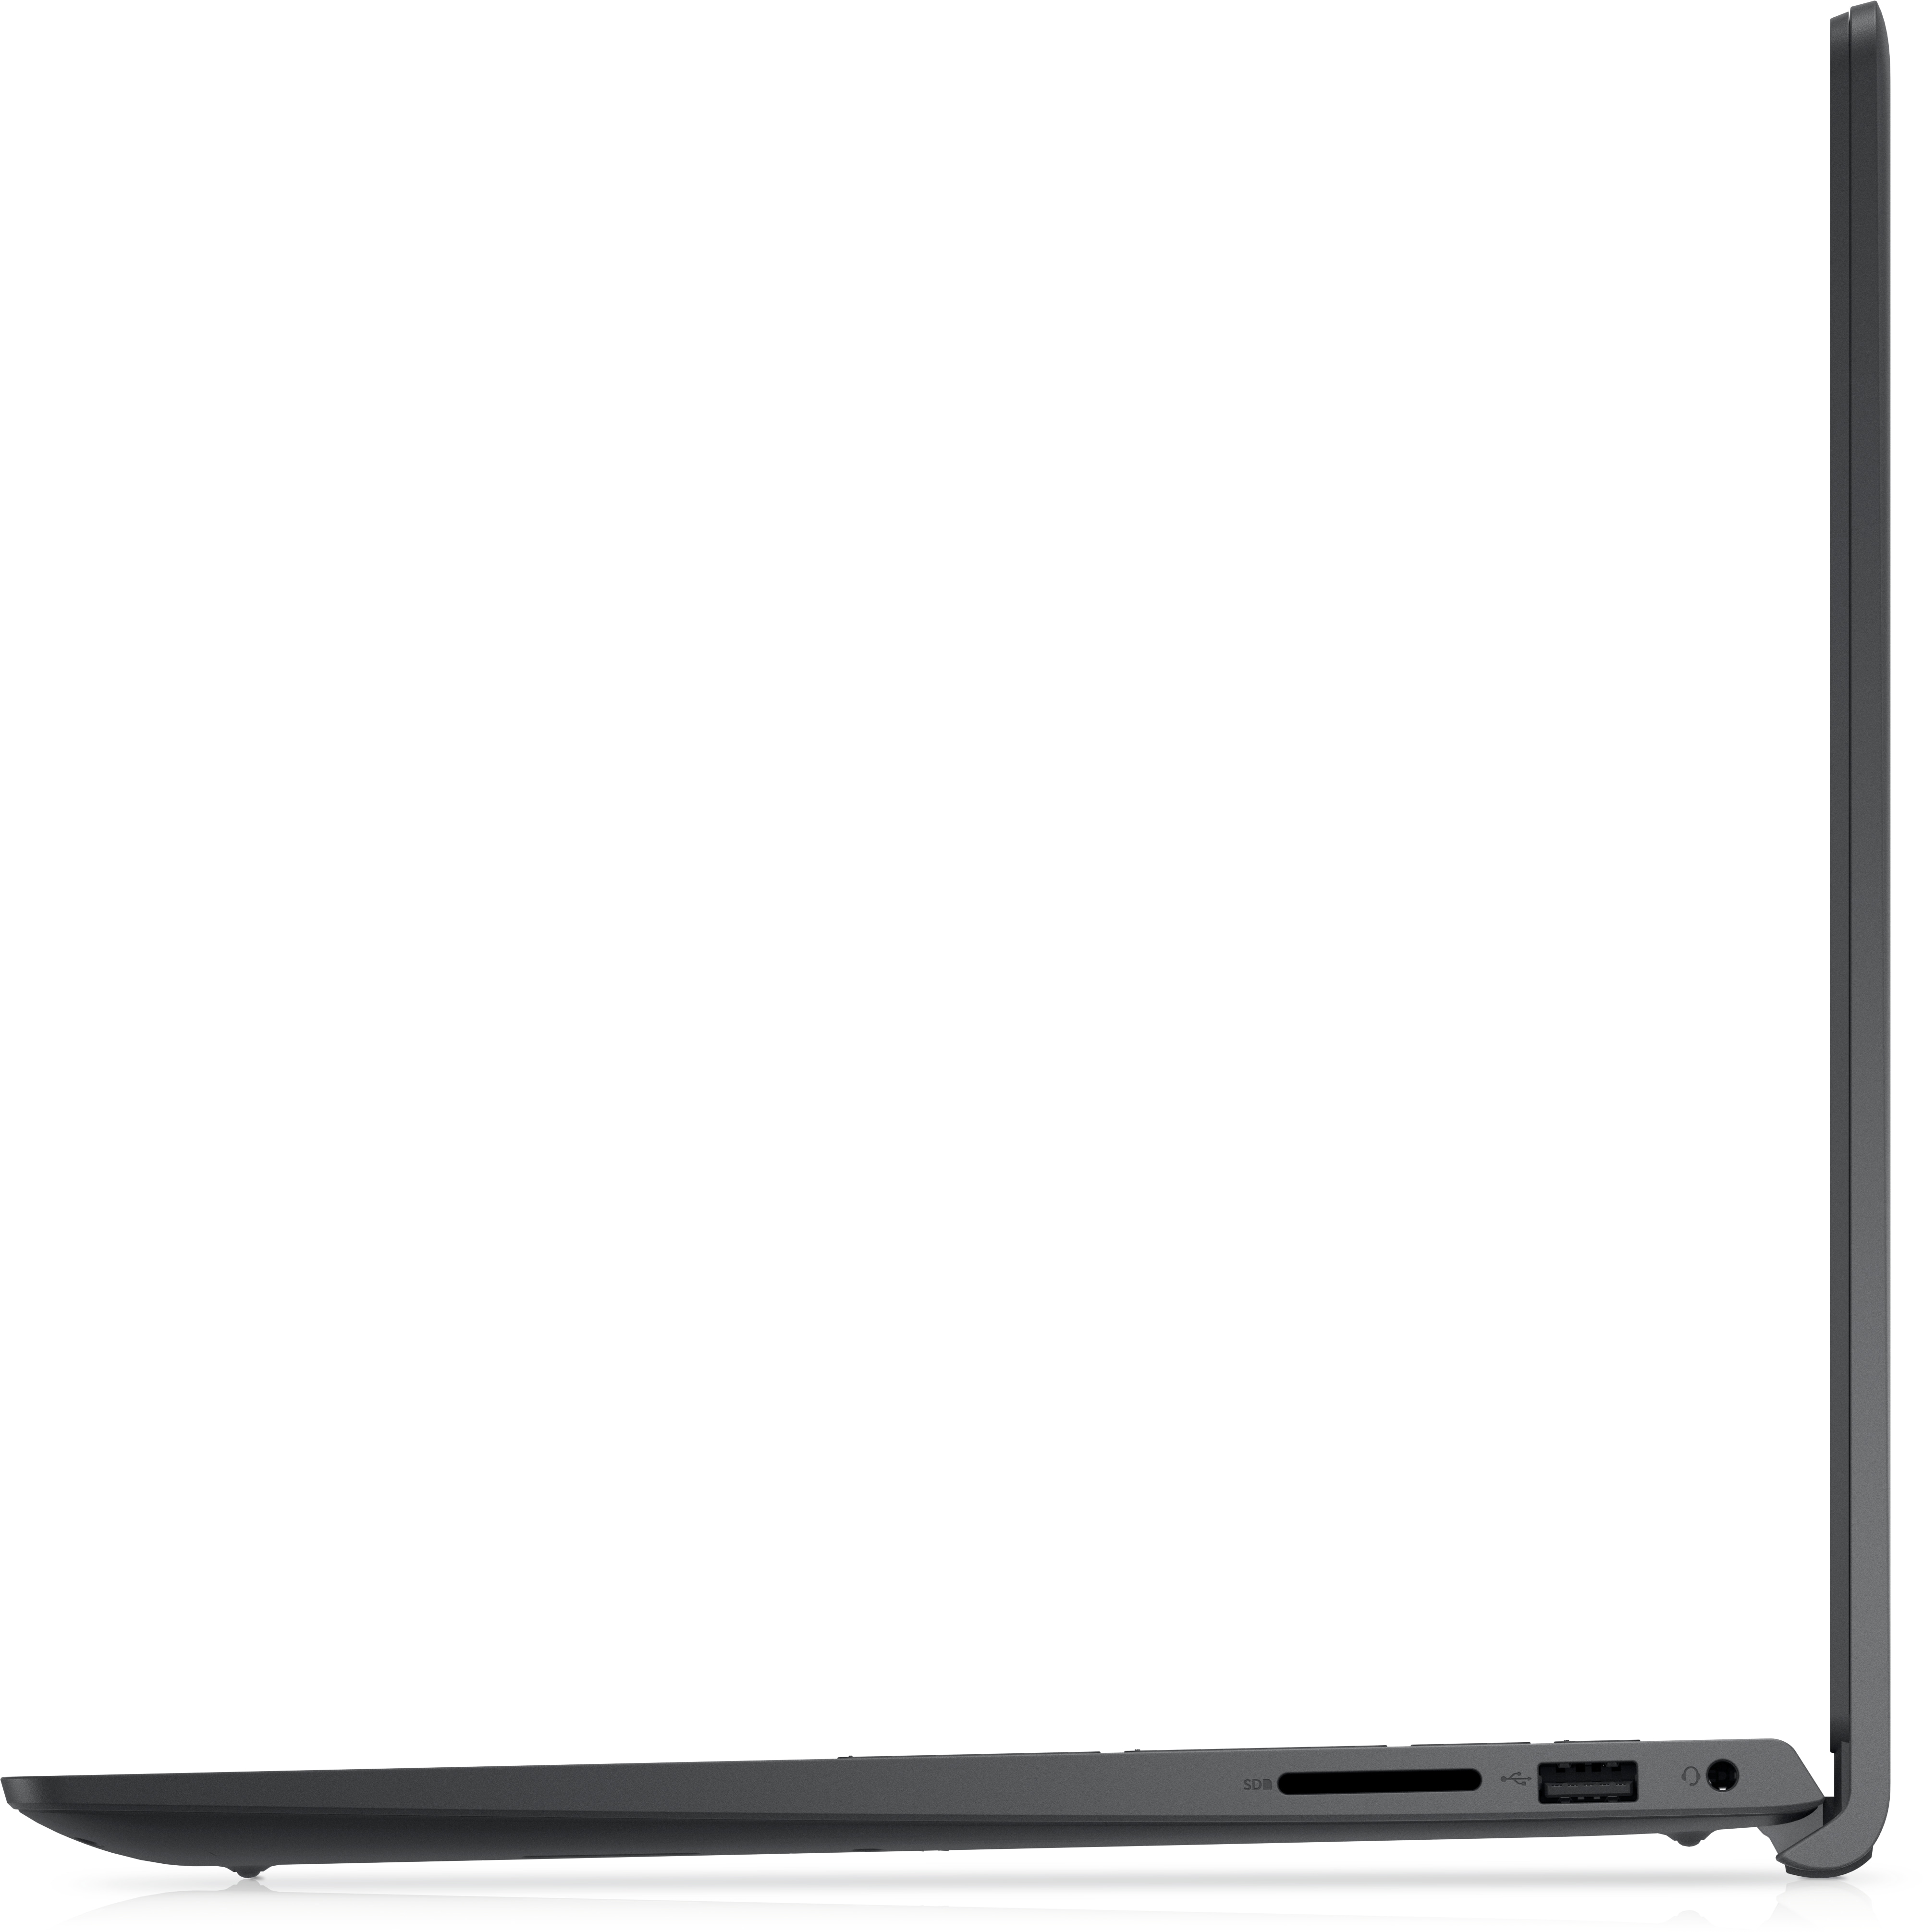 Inspiron 15 Inch Laptop (AMD) : Inspiron Laptops | Dell USA